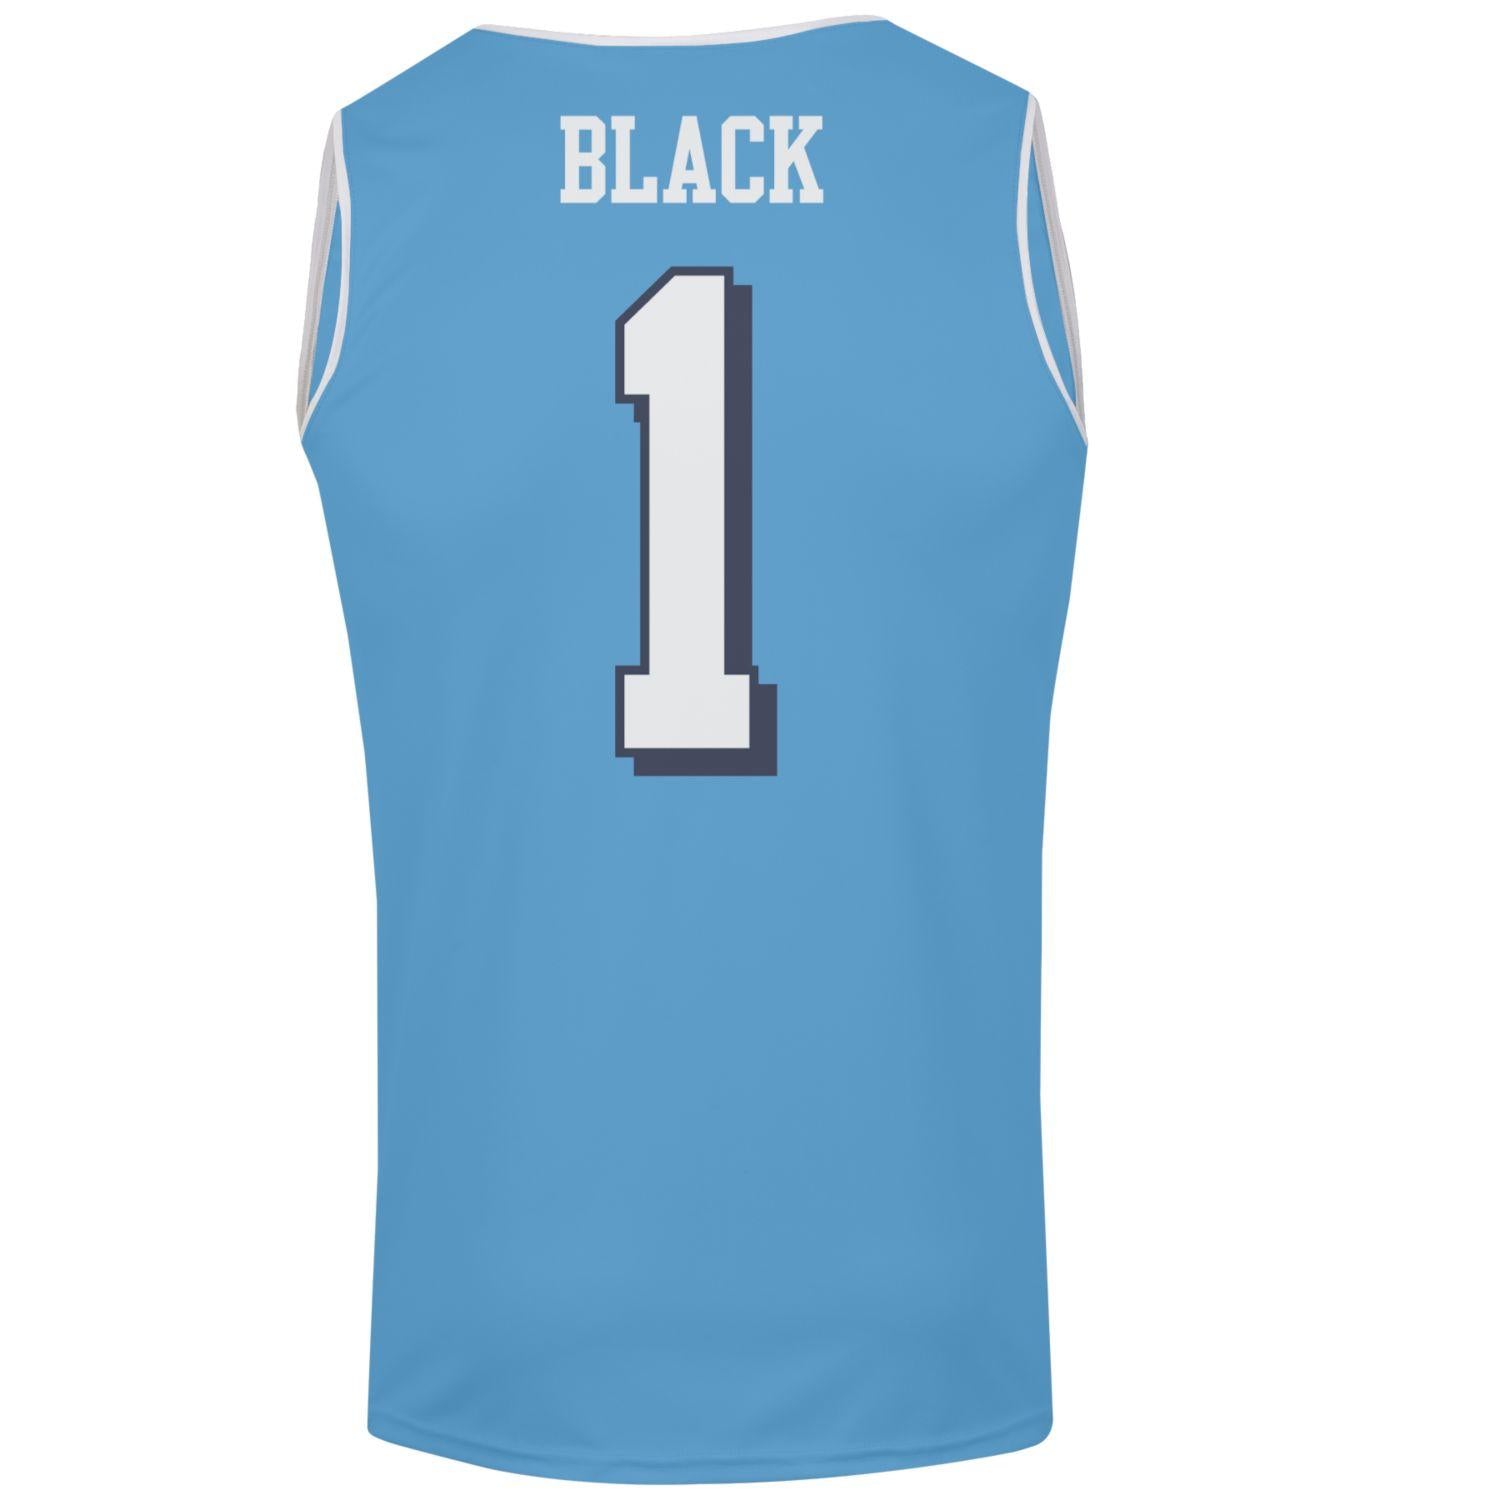 North Carolina basketball: Tar Heels wearing black uniforms vs